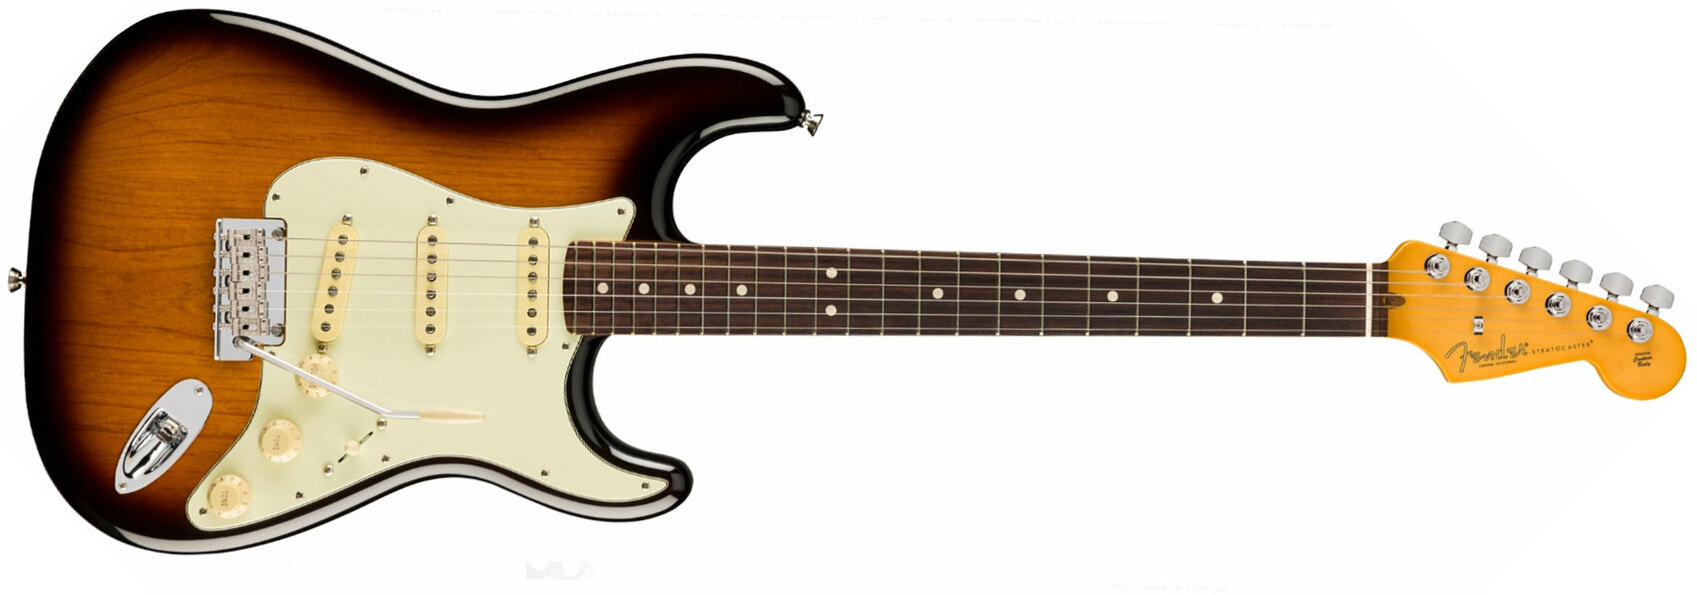 Fender Strat American Professional Ii 70th Anniversary Usa 3s Trem Rw - 2-color Sunburst - Guitarra eléctrica con forma de str. - Main picture